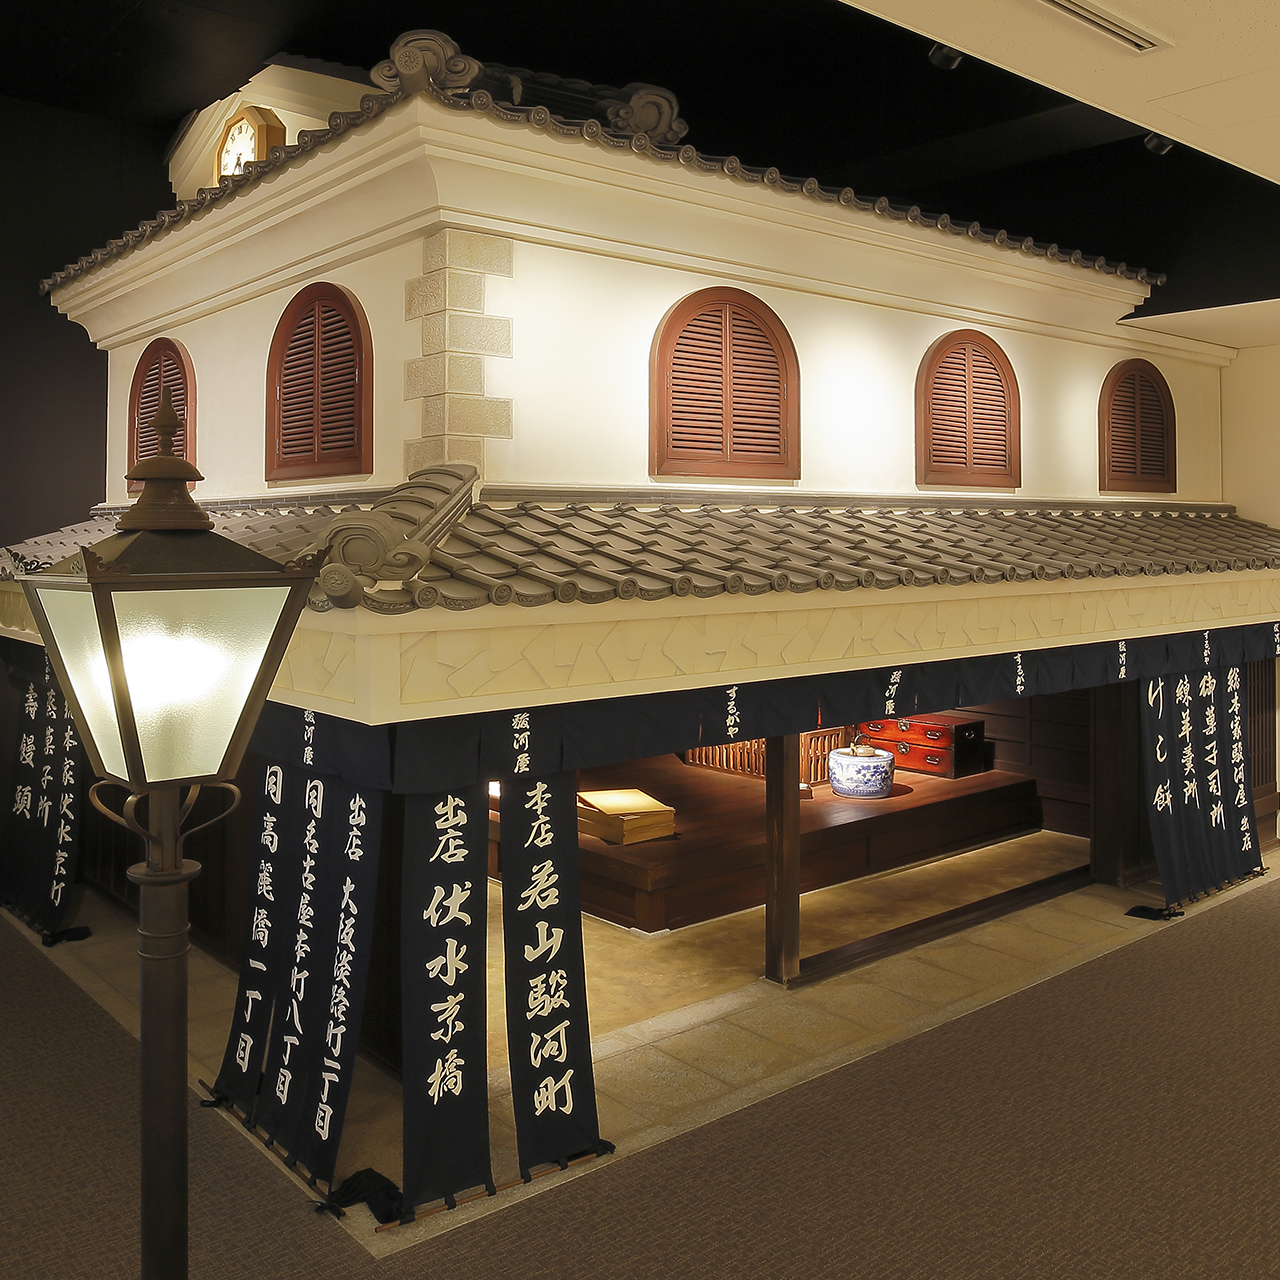 Osaka Sakai Plaza of Rikyu and Akiko Exhibition - Admission Fee & VR Experience